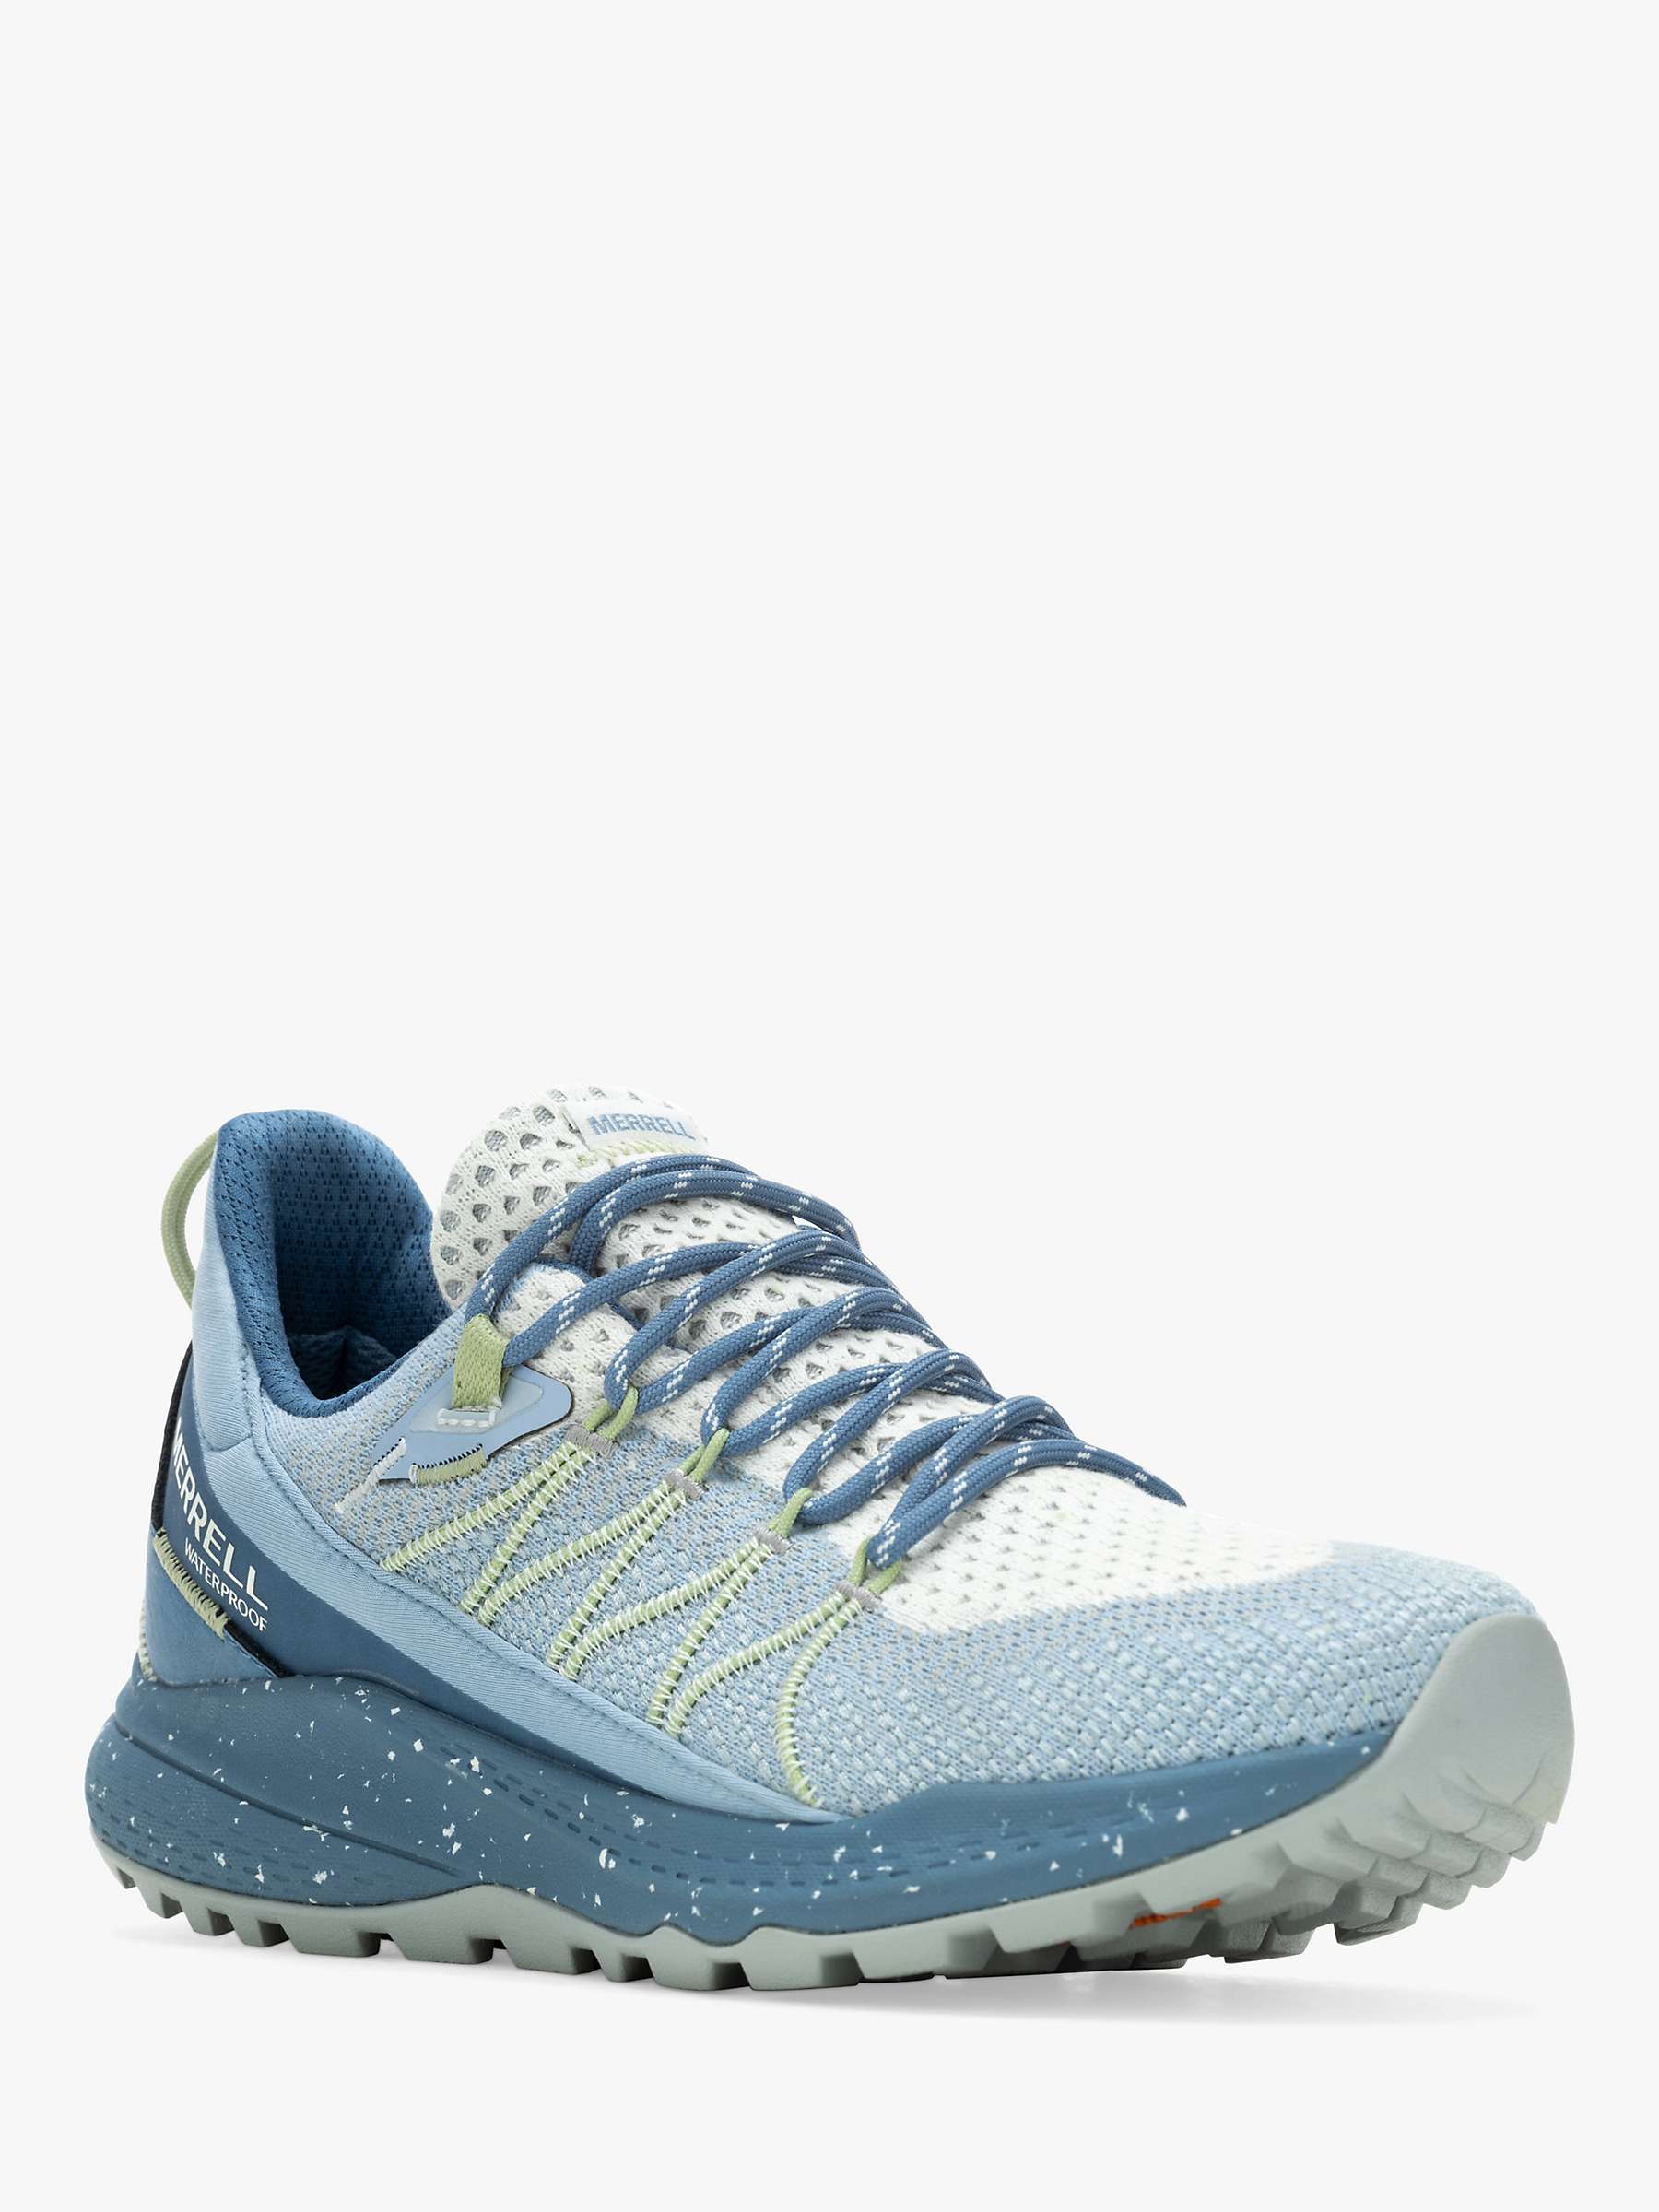 Buy Merrell Bravada 2 Women's Hiking Shoes, Chambray Online at johnlewis.com